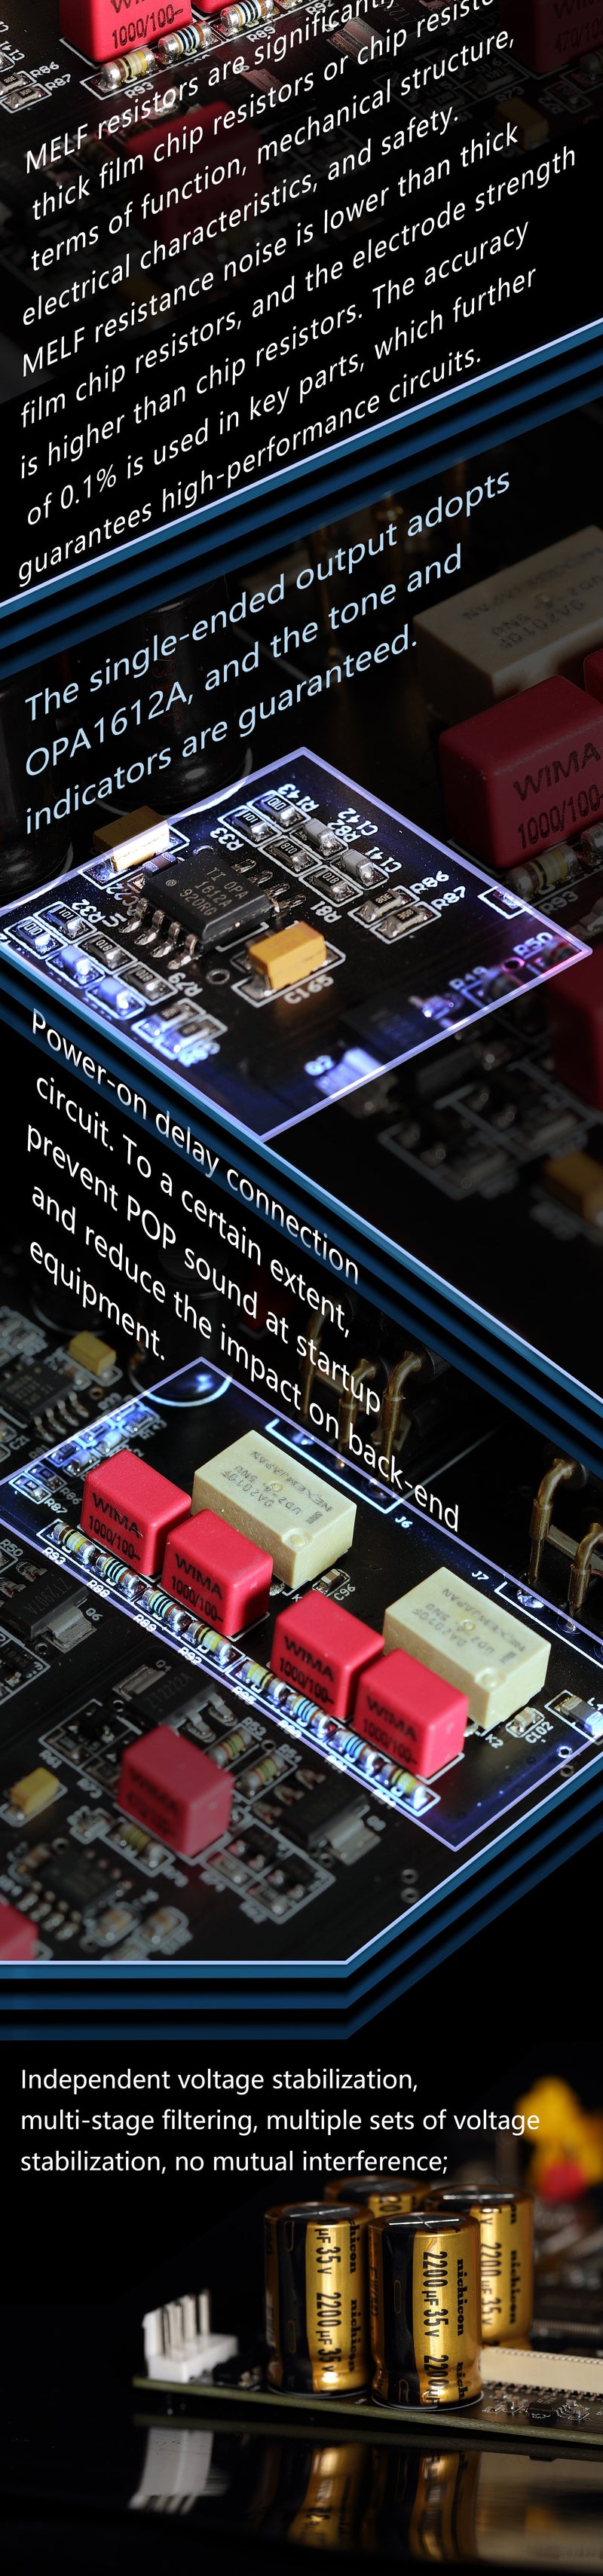 Apos Audio Gustard DAC (Digital-to-Analog Converter) Gustard X16 DAC (Digital-to-Analog Converter)